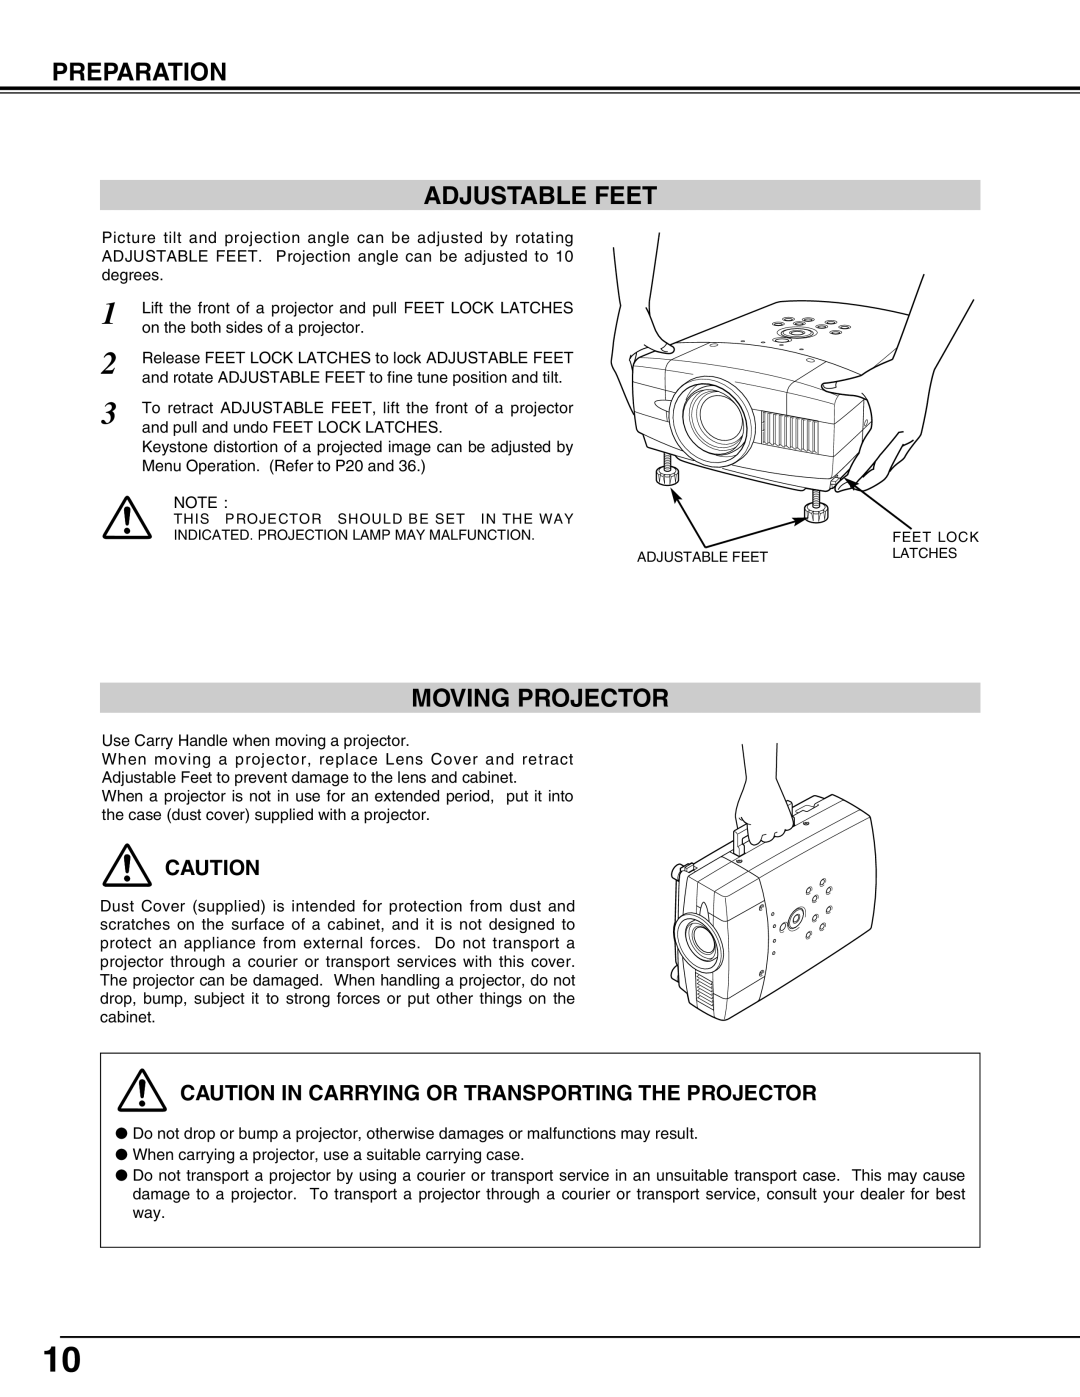 Christie Digital Systems 38-VIV207-01 user manual Preparation Adjustable Feet, Moving Projector 